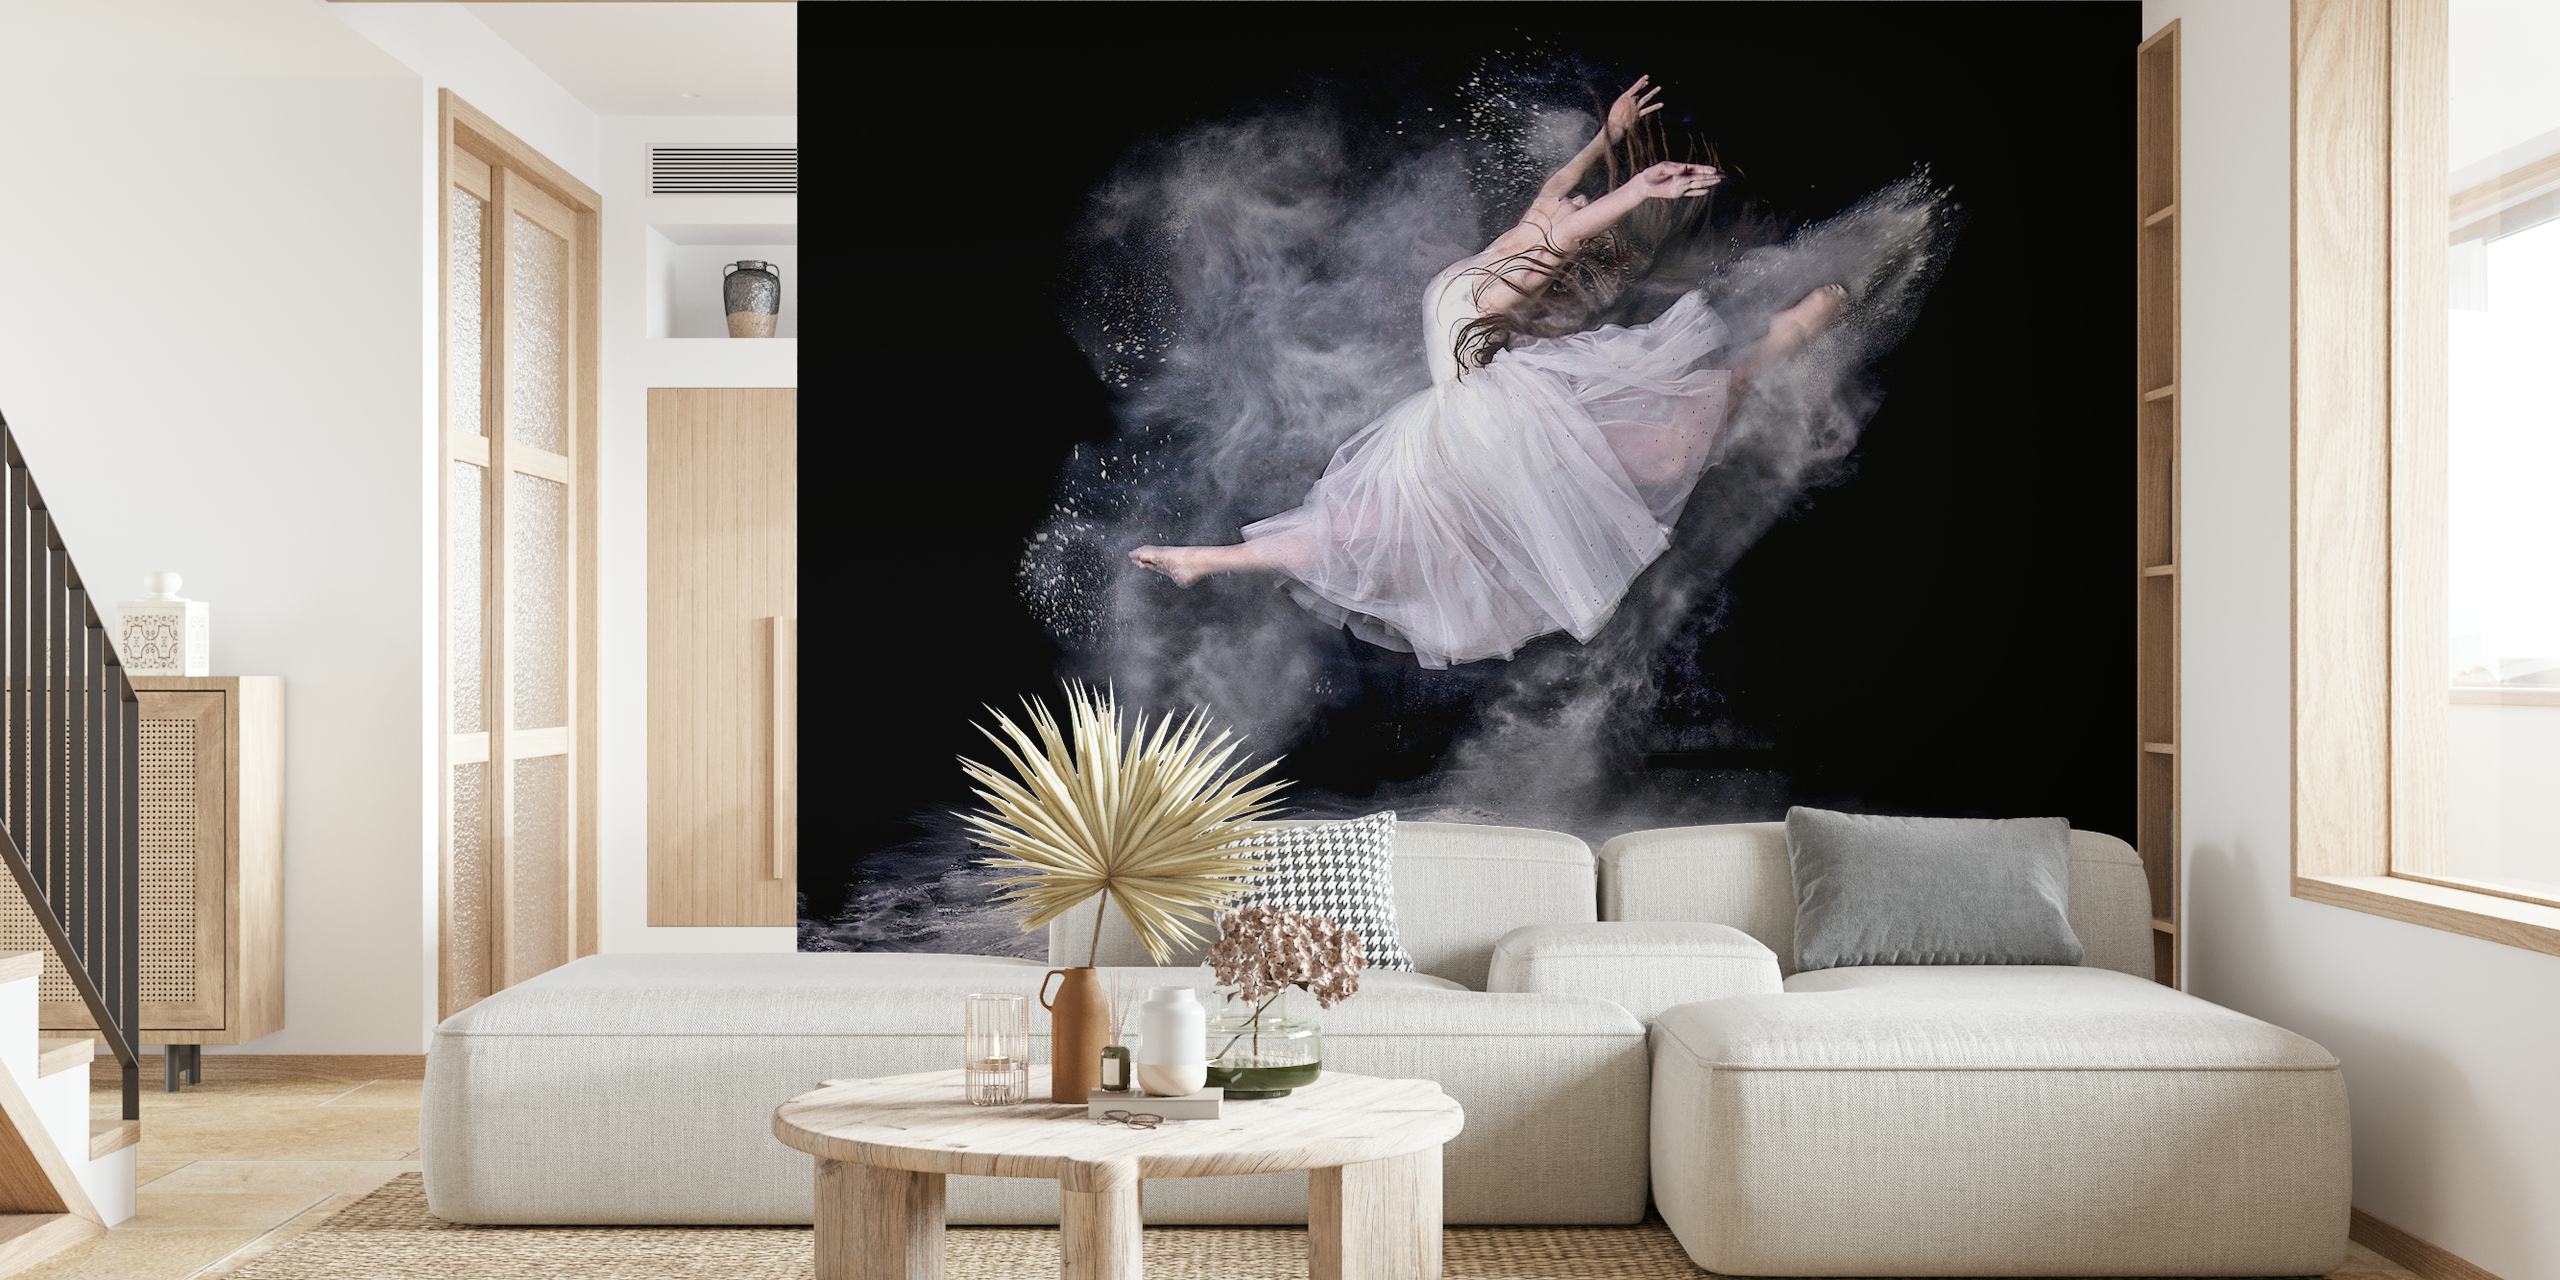 Balletdanser in mist muurschildering voor interieurdecoratie